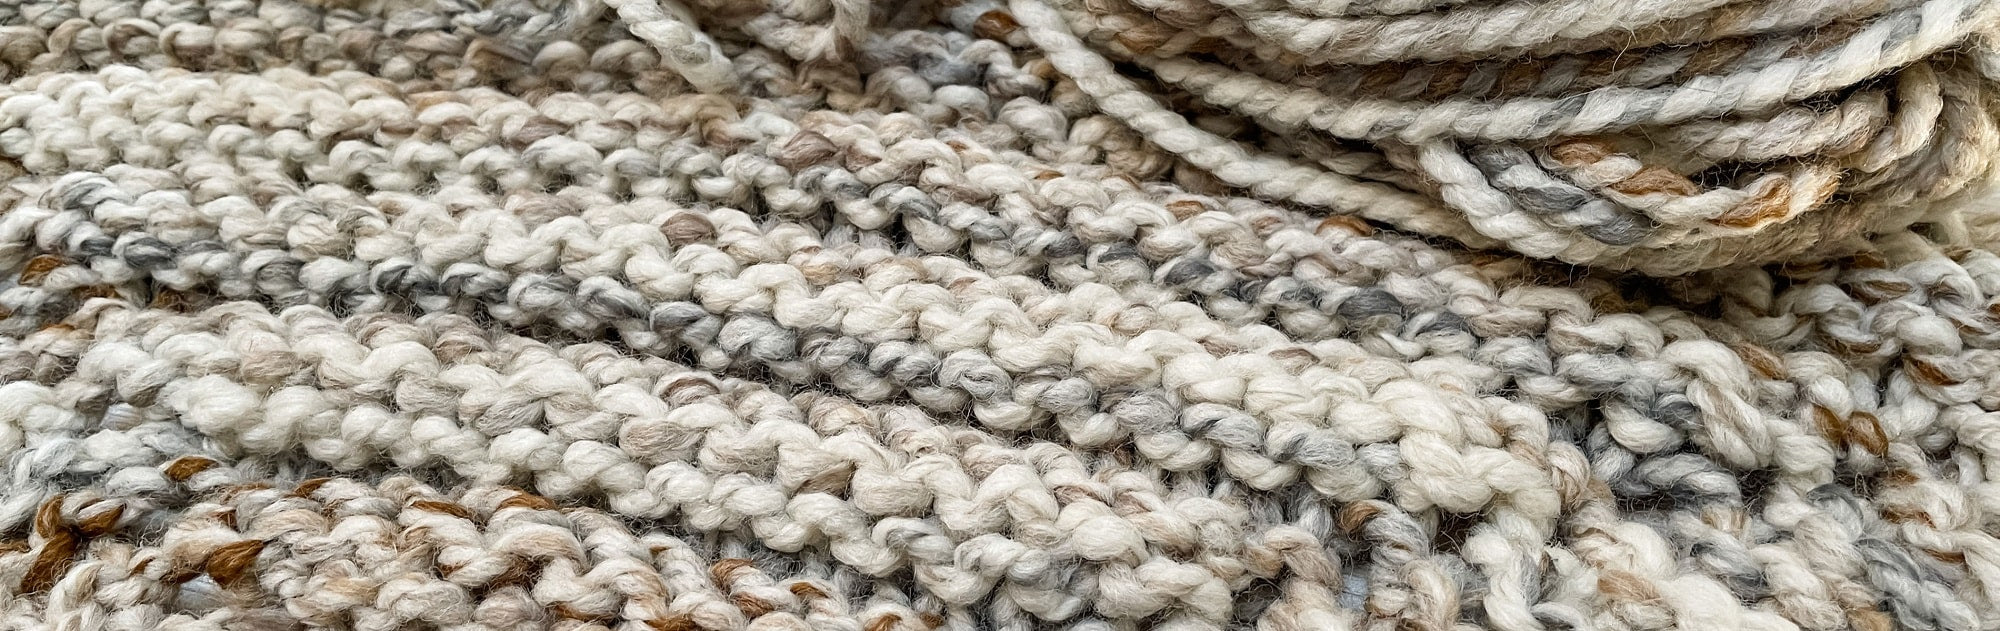 Yarn and Free Knitting and Crochet Patterns – Lion Brand Yarn